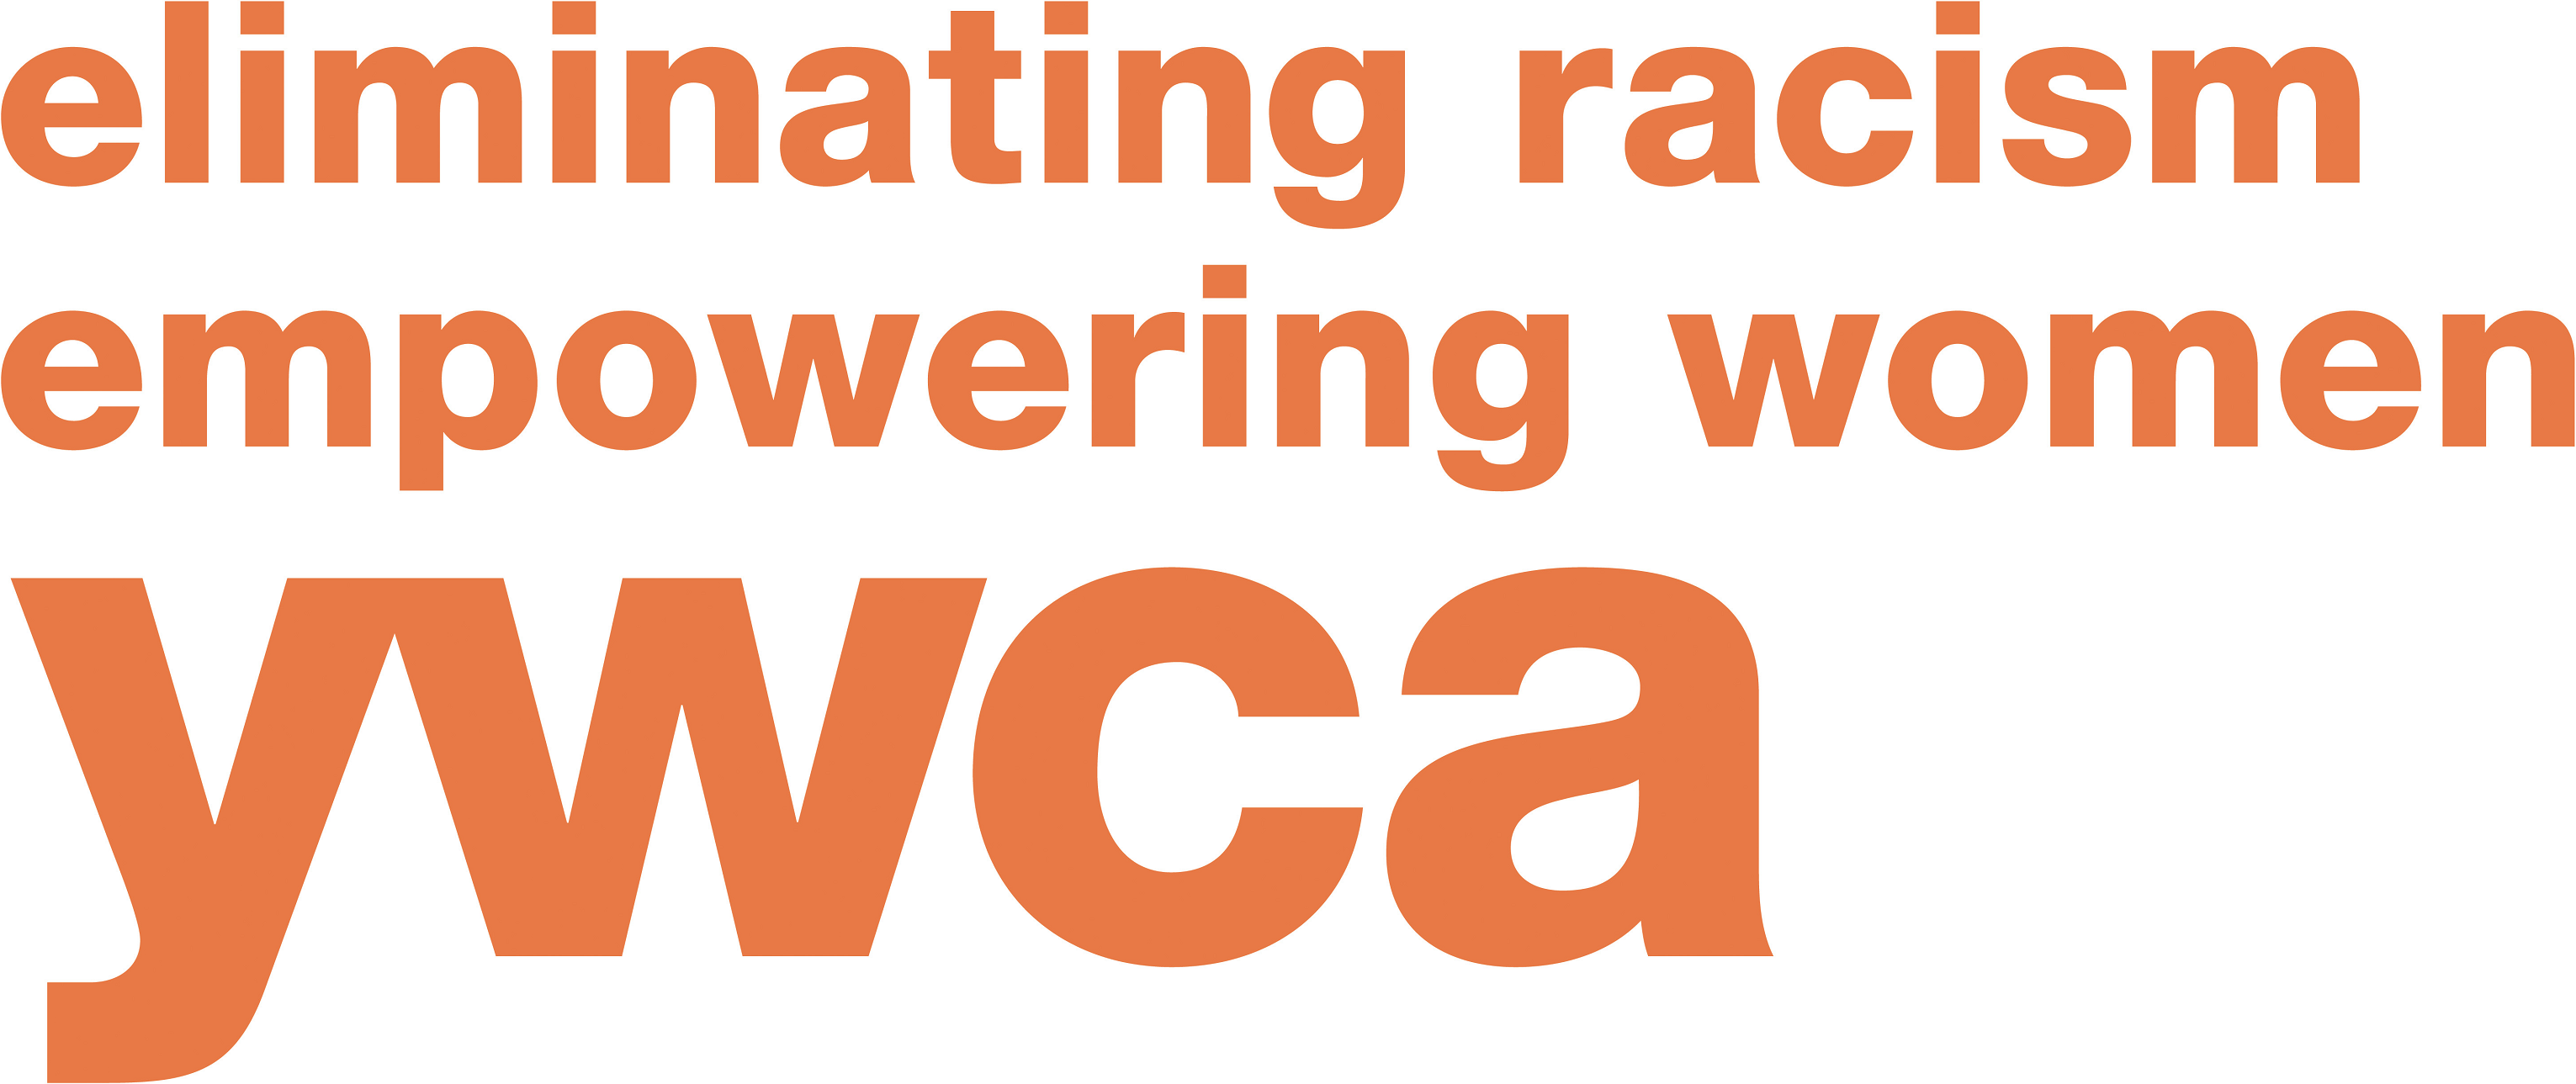 YWCA branded tagline in orange: Eliminating racism empowering women text over YWCA